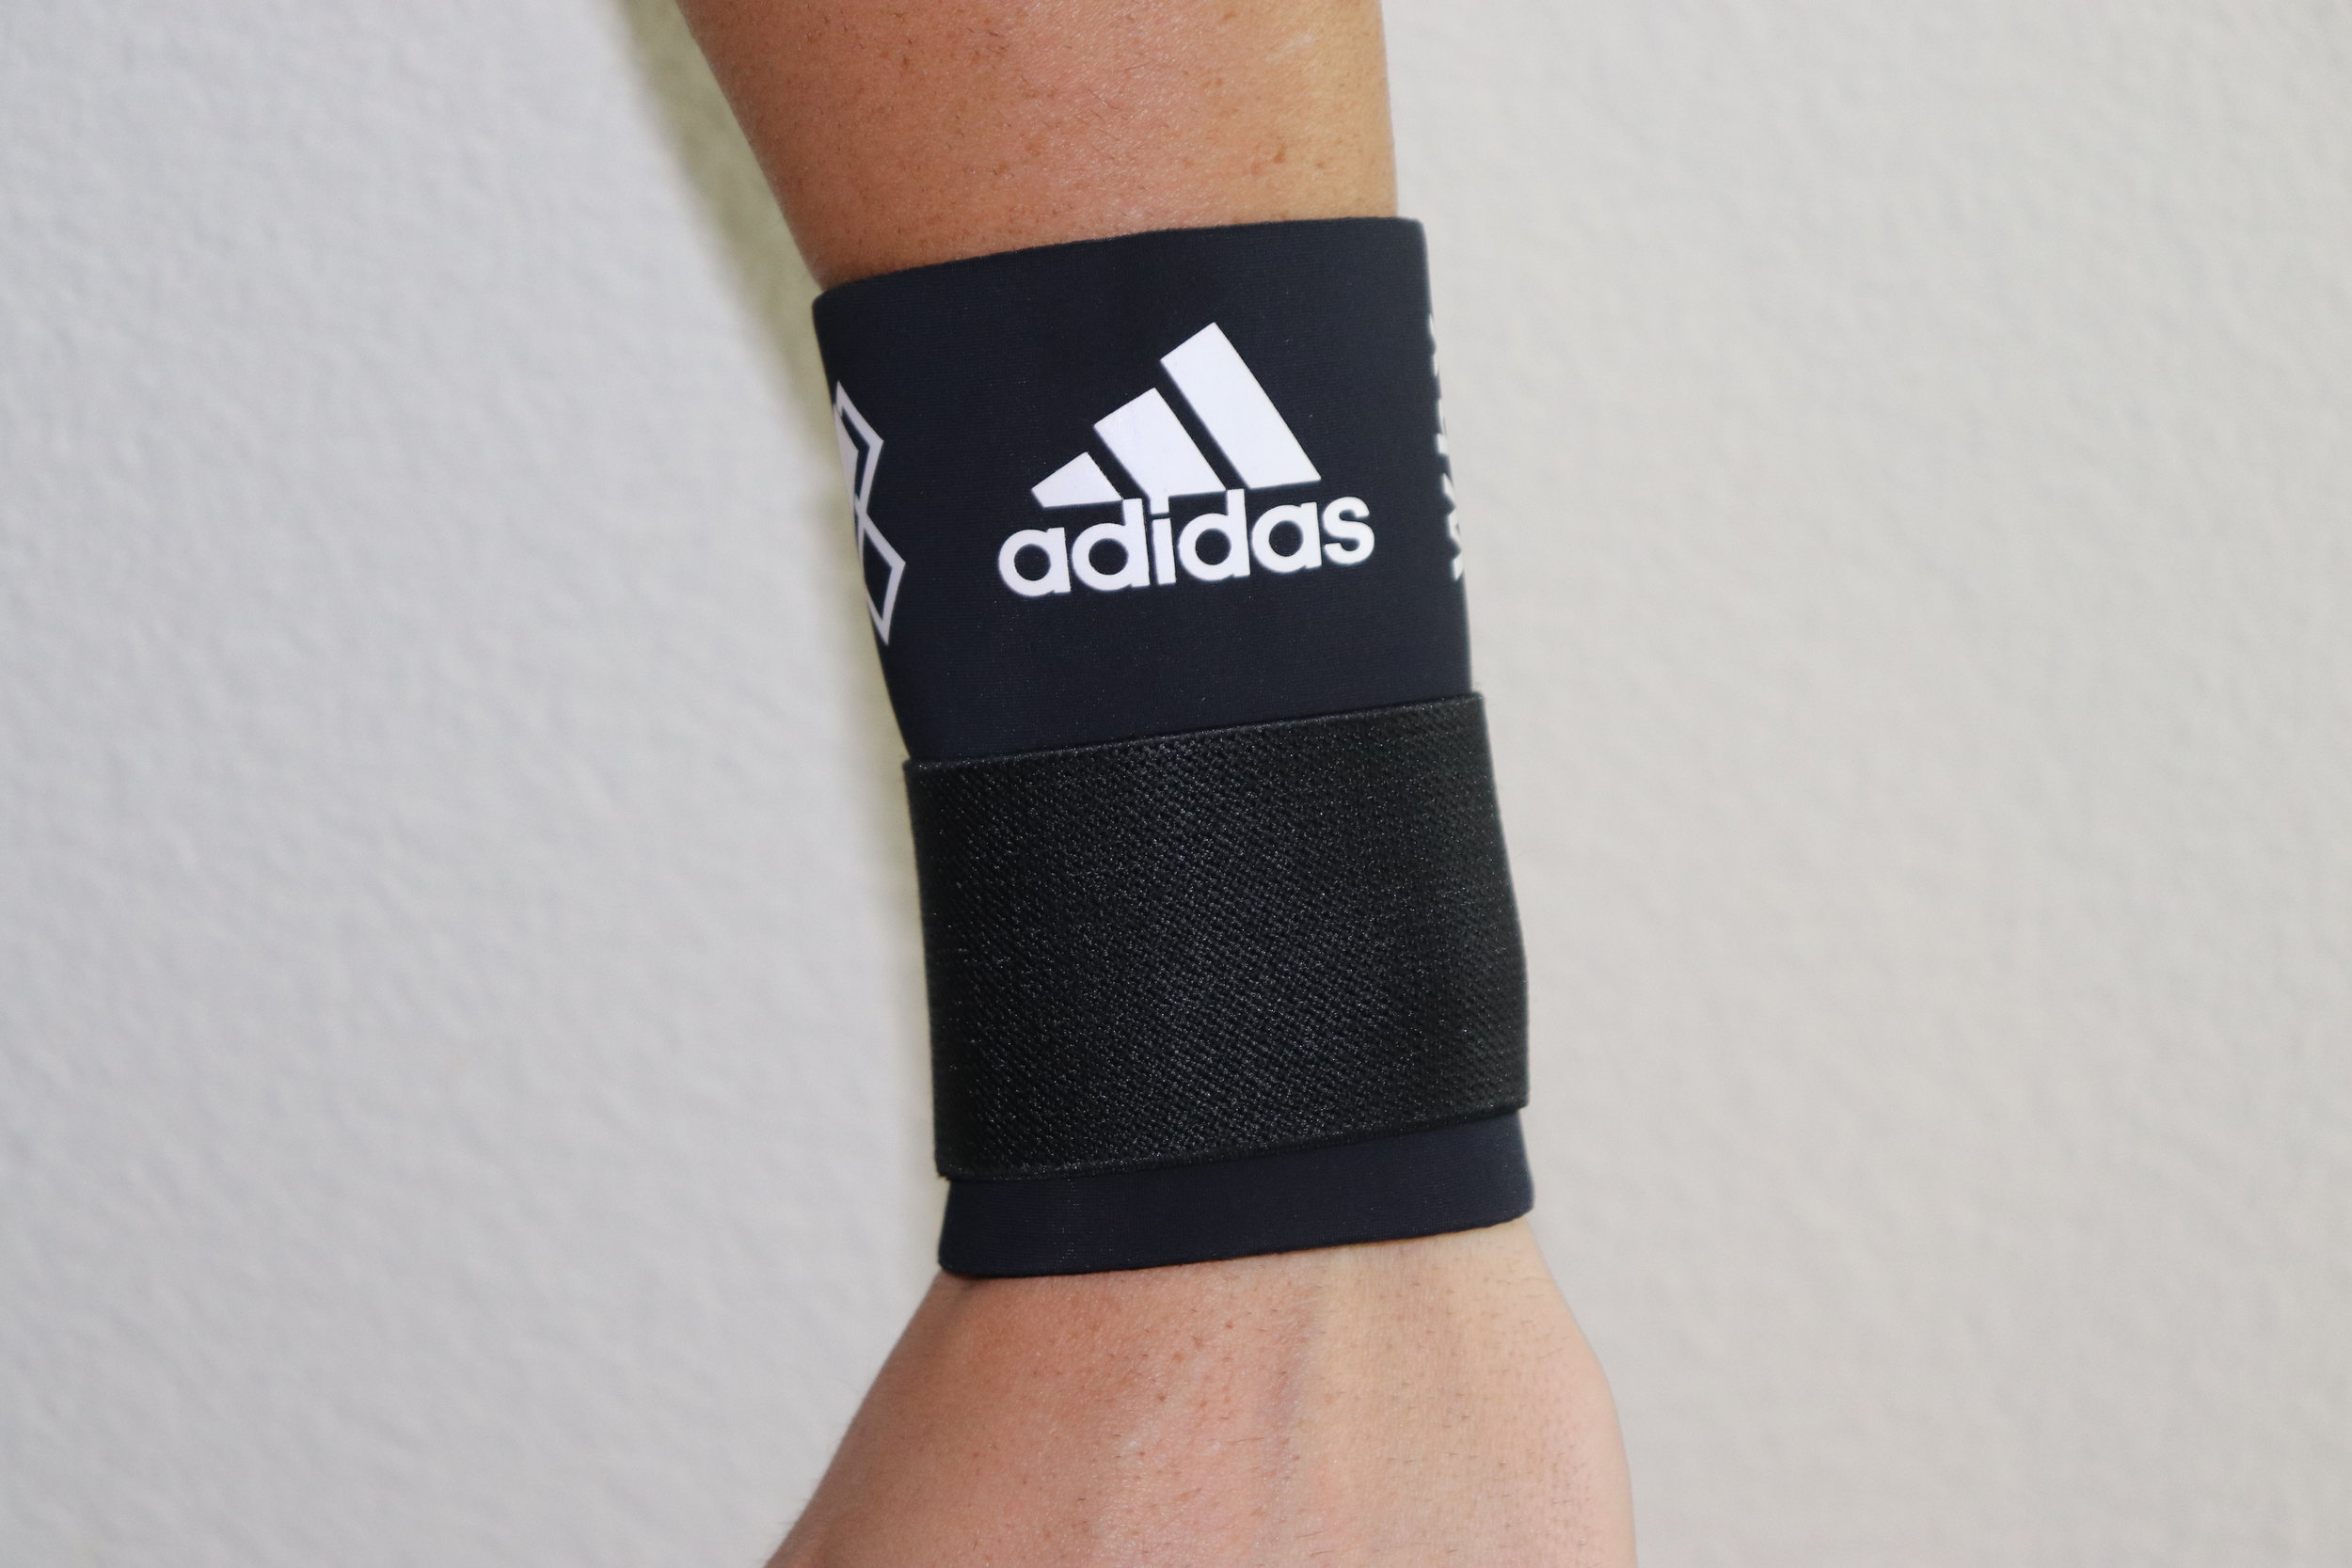 adidas wrist support